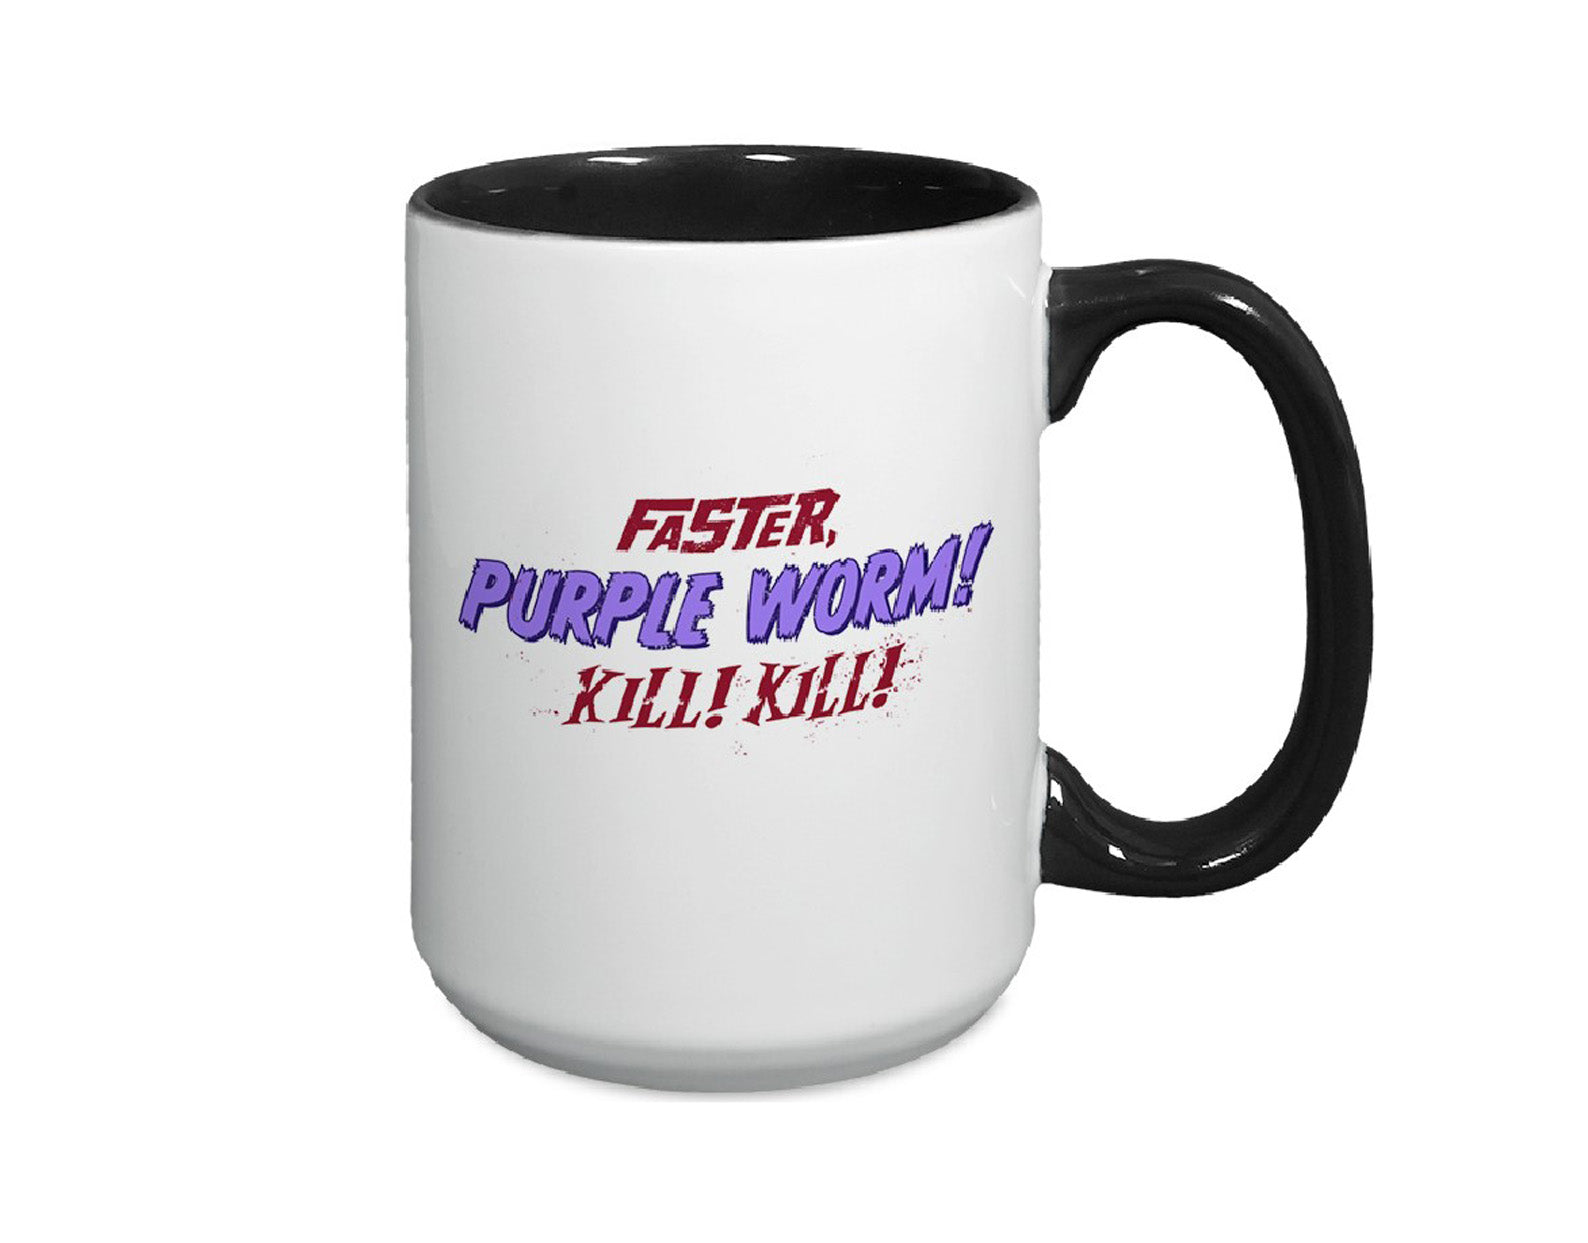 Faster, Purple Worm! Kill! Kill! Logo Mug